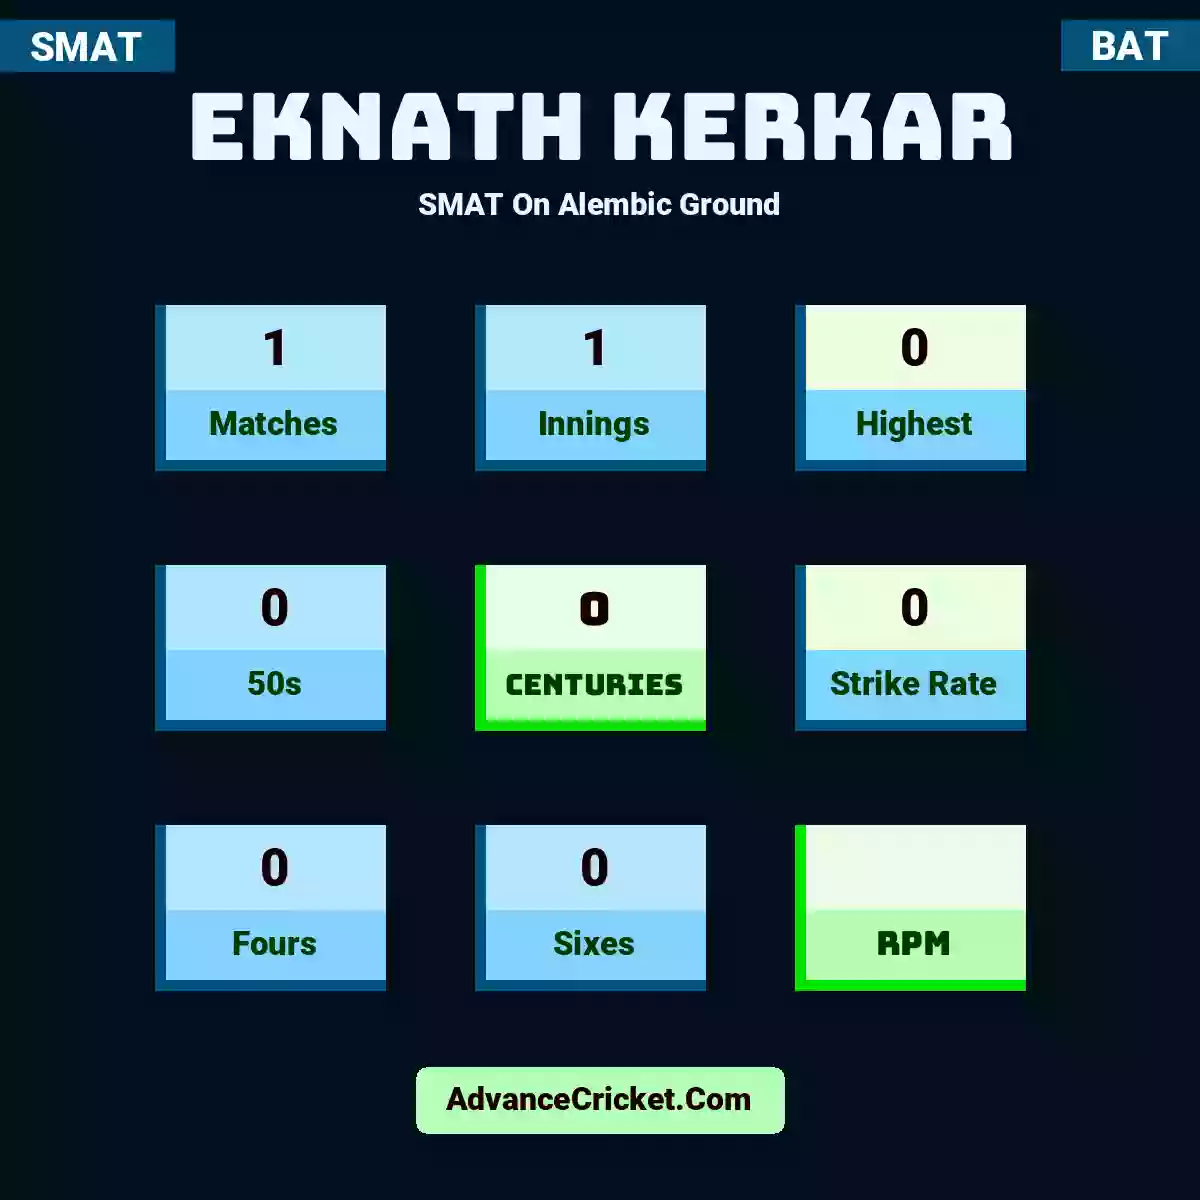 Eknath Kerkar SMAT  On Alembic Ground, Eknath Kerkar played 1 matches, scored 0 runs as highest, 0 half-centuries, and 0 centuries, with a strike rate of 0. E.Kerkar hit 0 fours and 0 sixes.